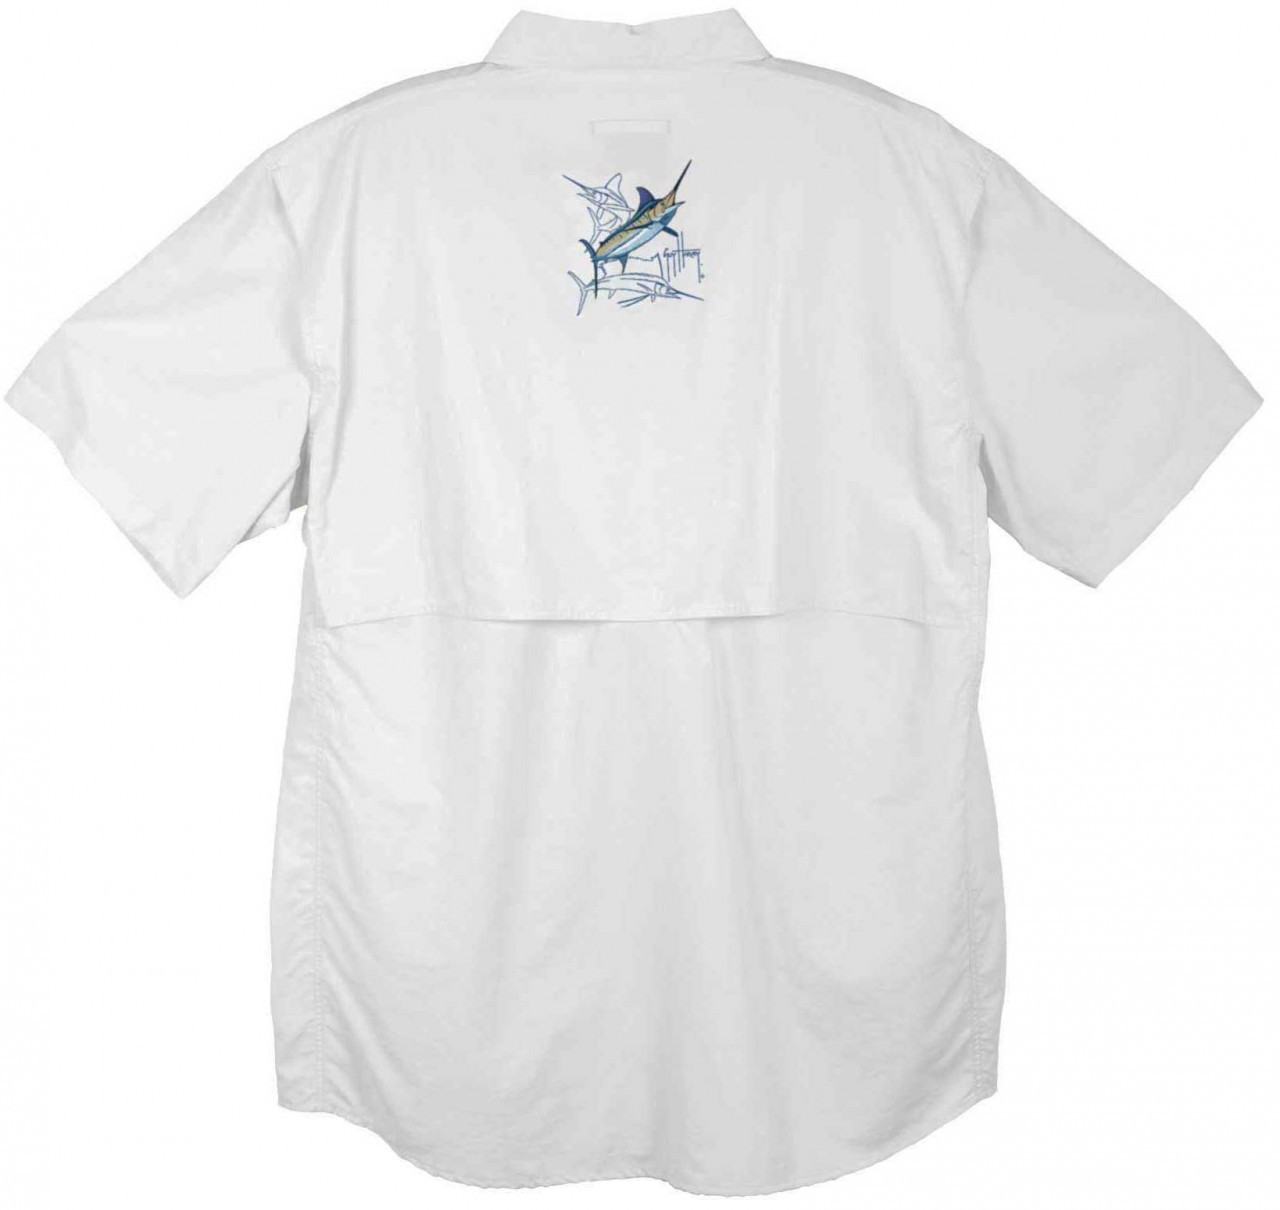 Guy Harvey Grand Slam Technical Fishing Shirt (Long or Short Sleeve) in  Aqua Blue, Sky Blue, Yellow, Tan, Black, Kiwi, Melon or White